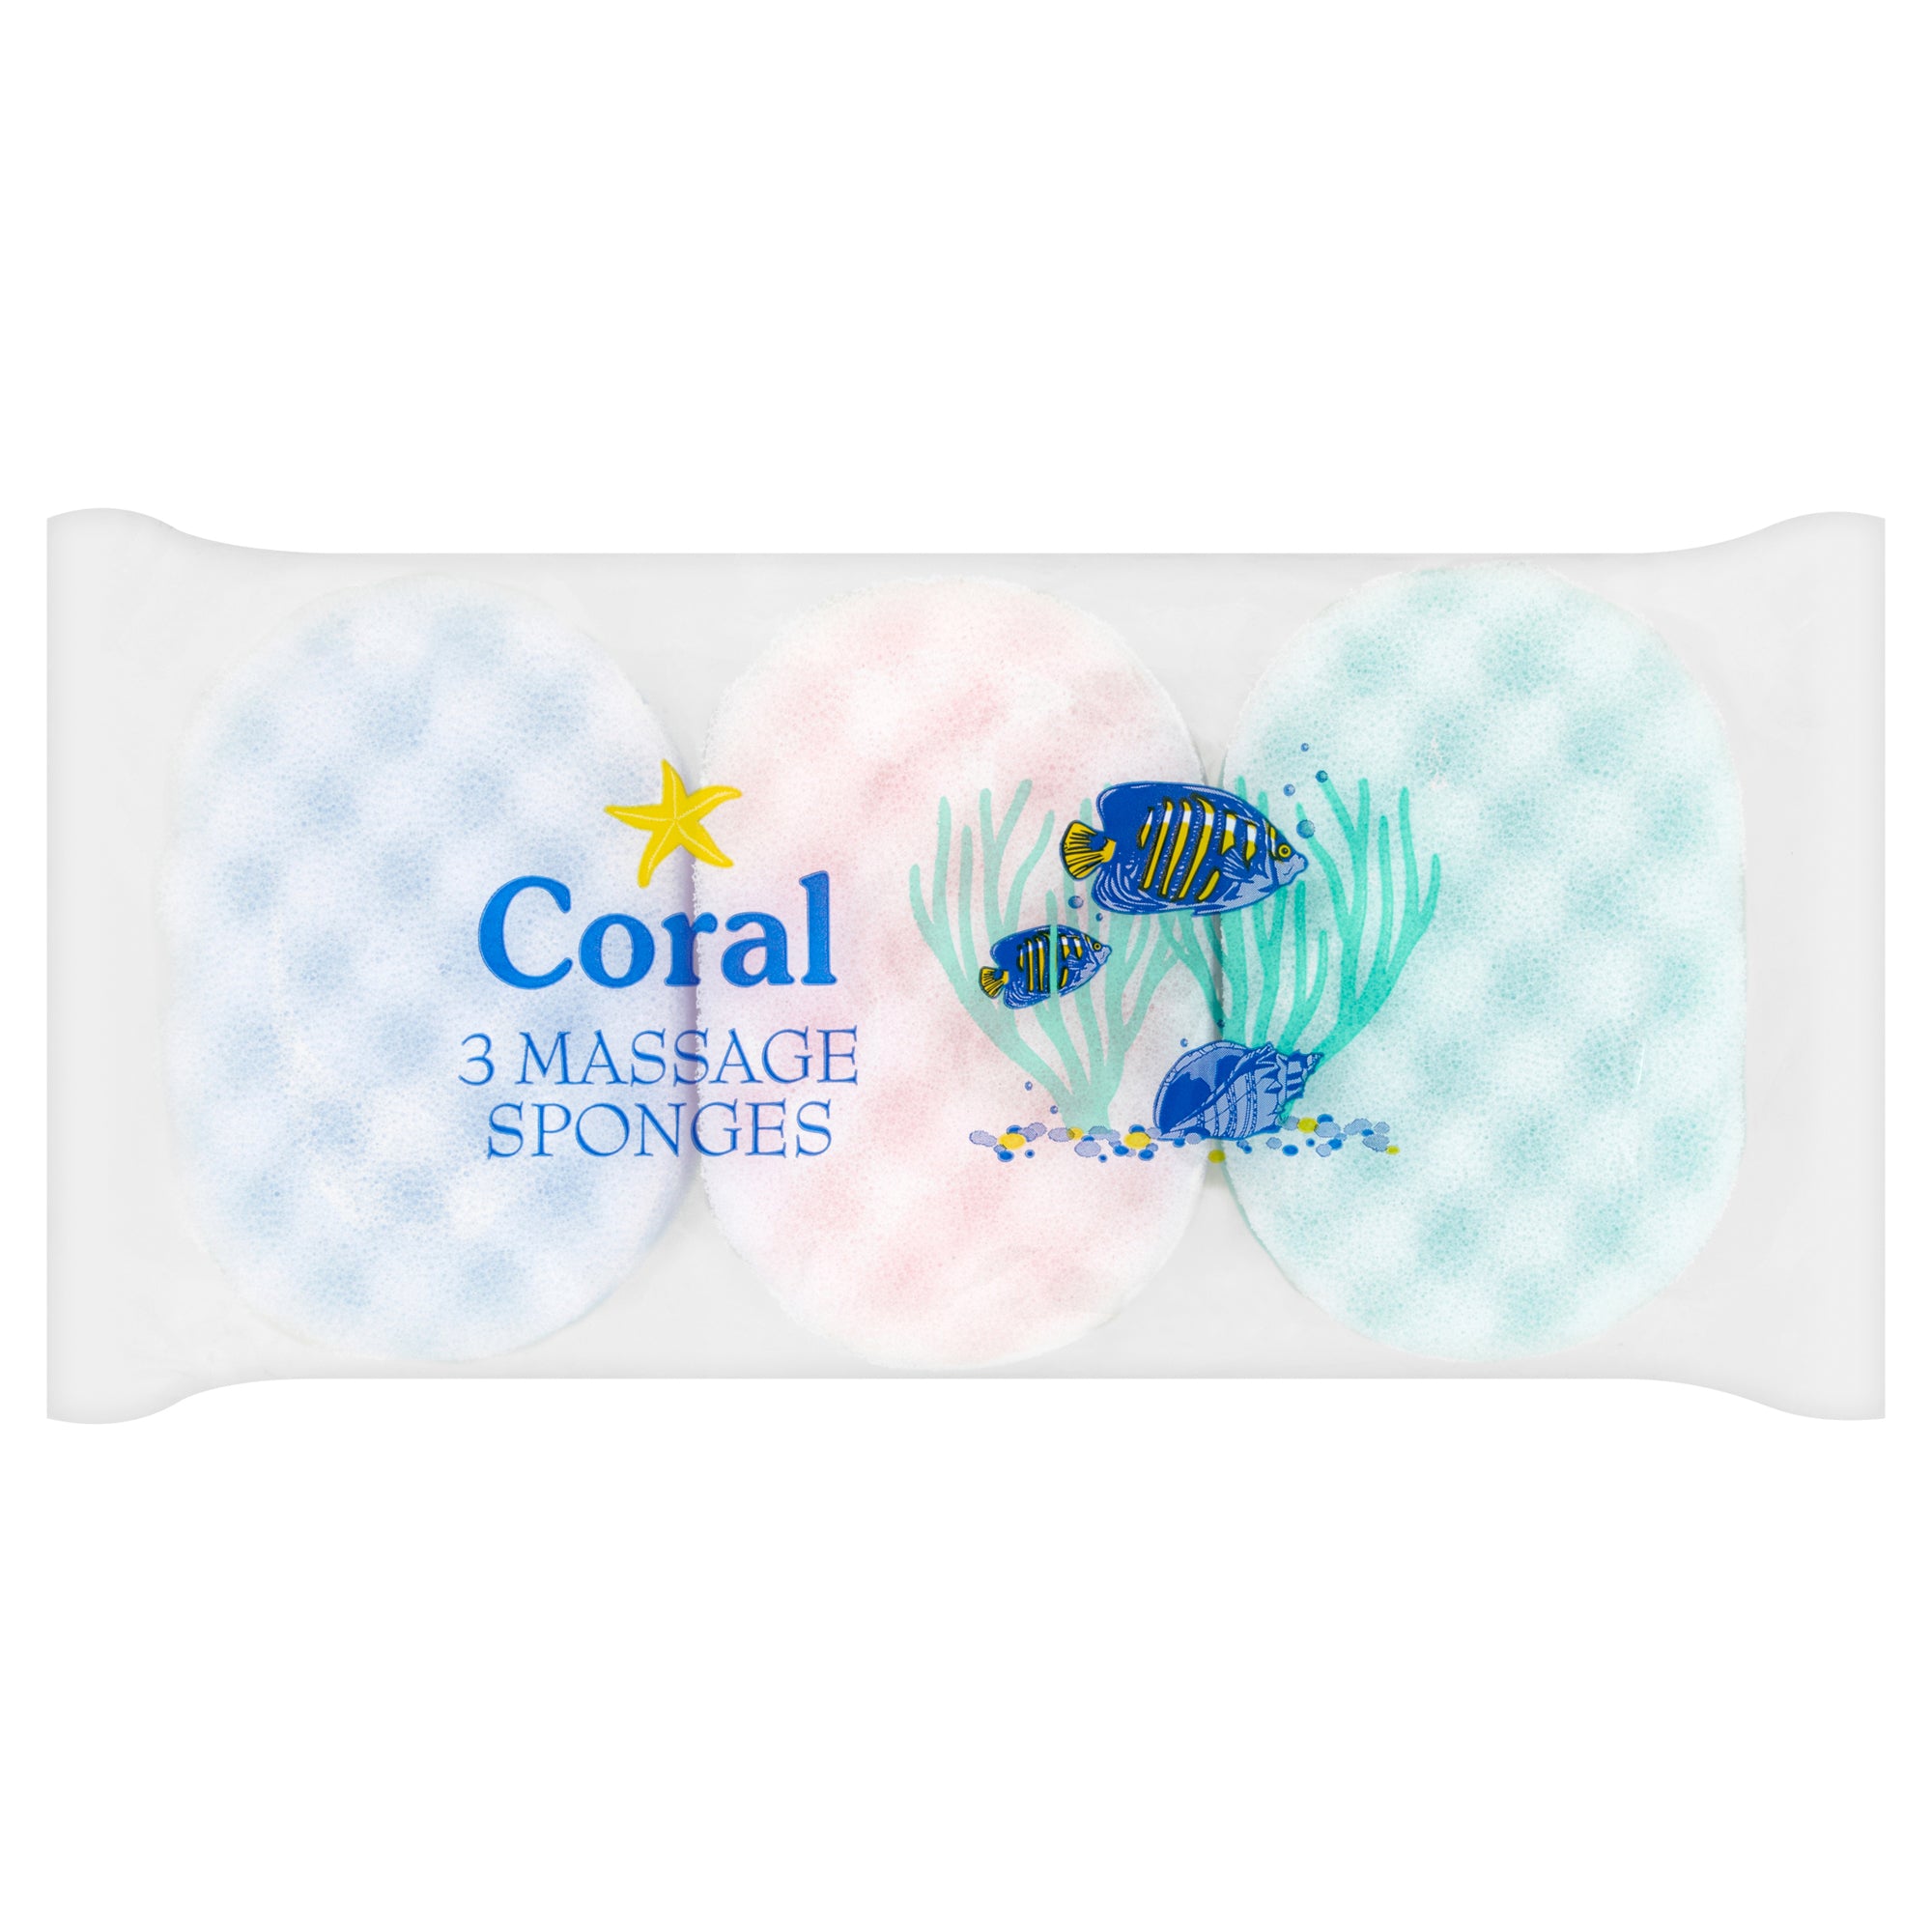 Coral Massage Sponges 3 pack